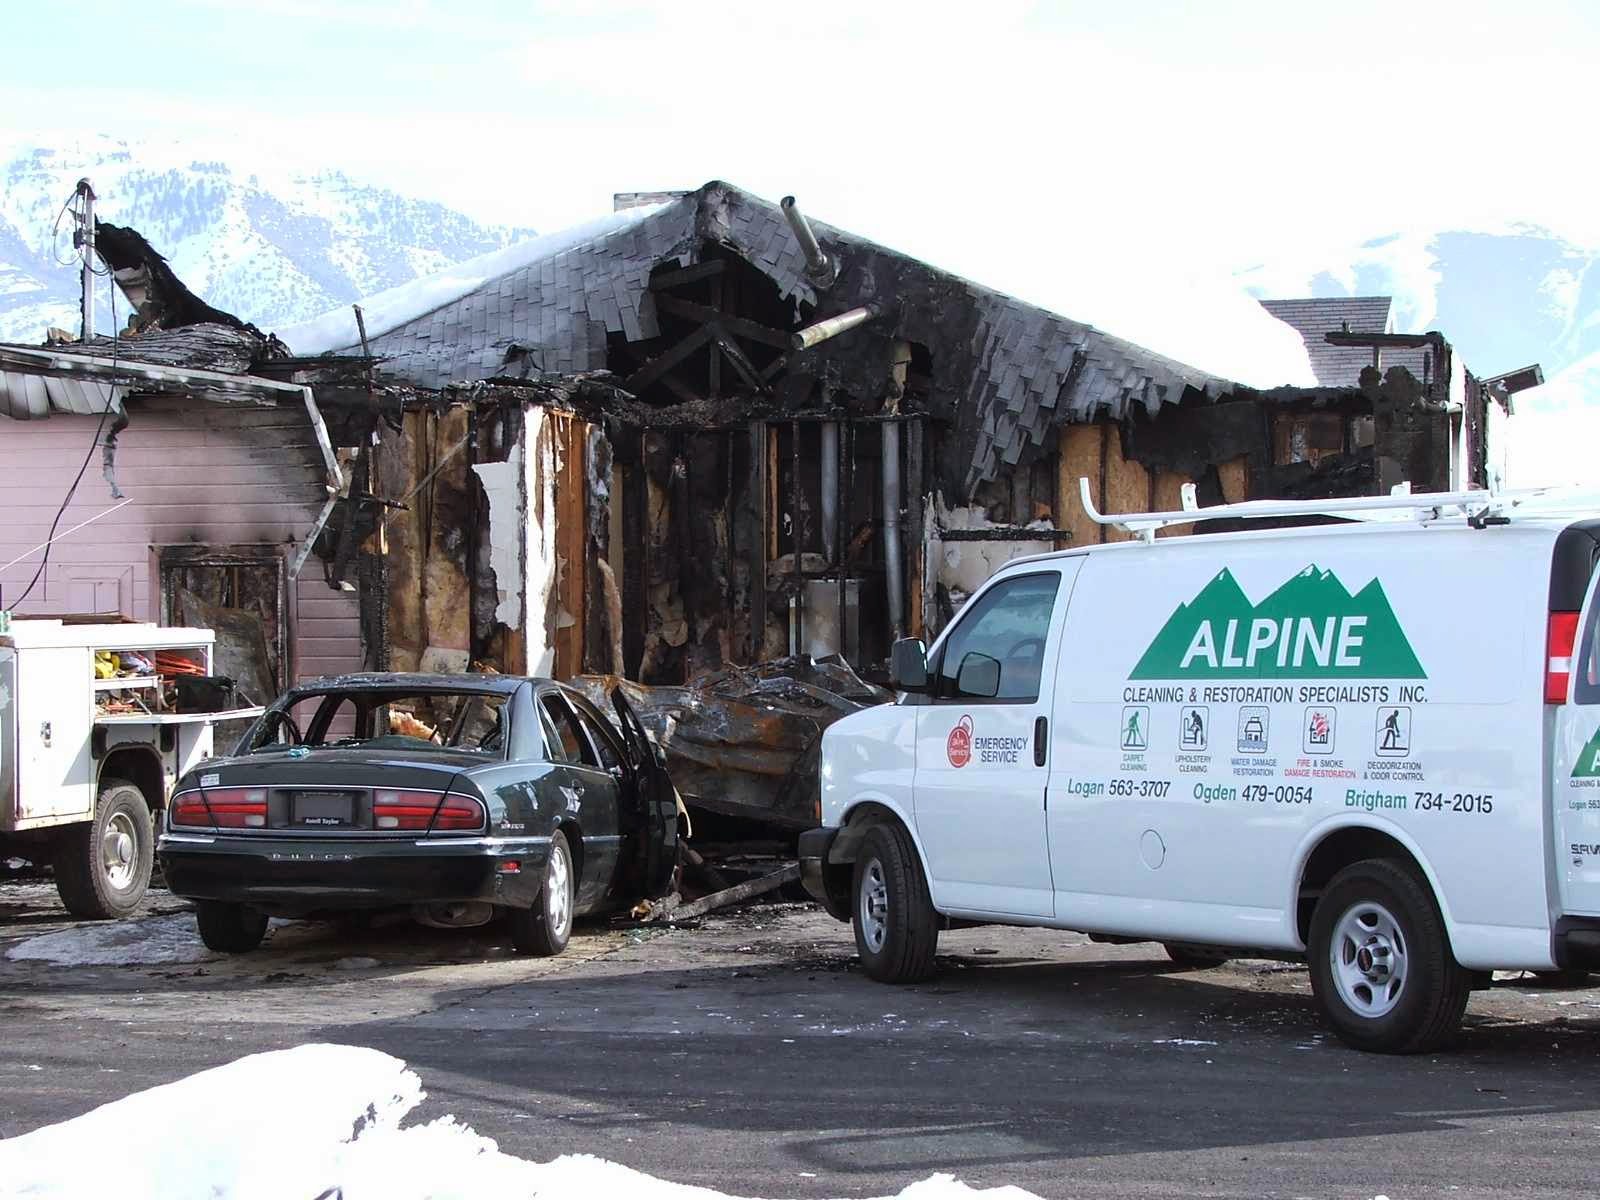 Alpine Cleaning & Restoration Specialists 177 S Main St, Smithfield Utah 84335